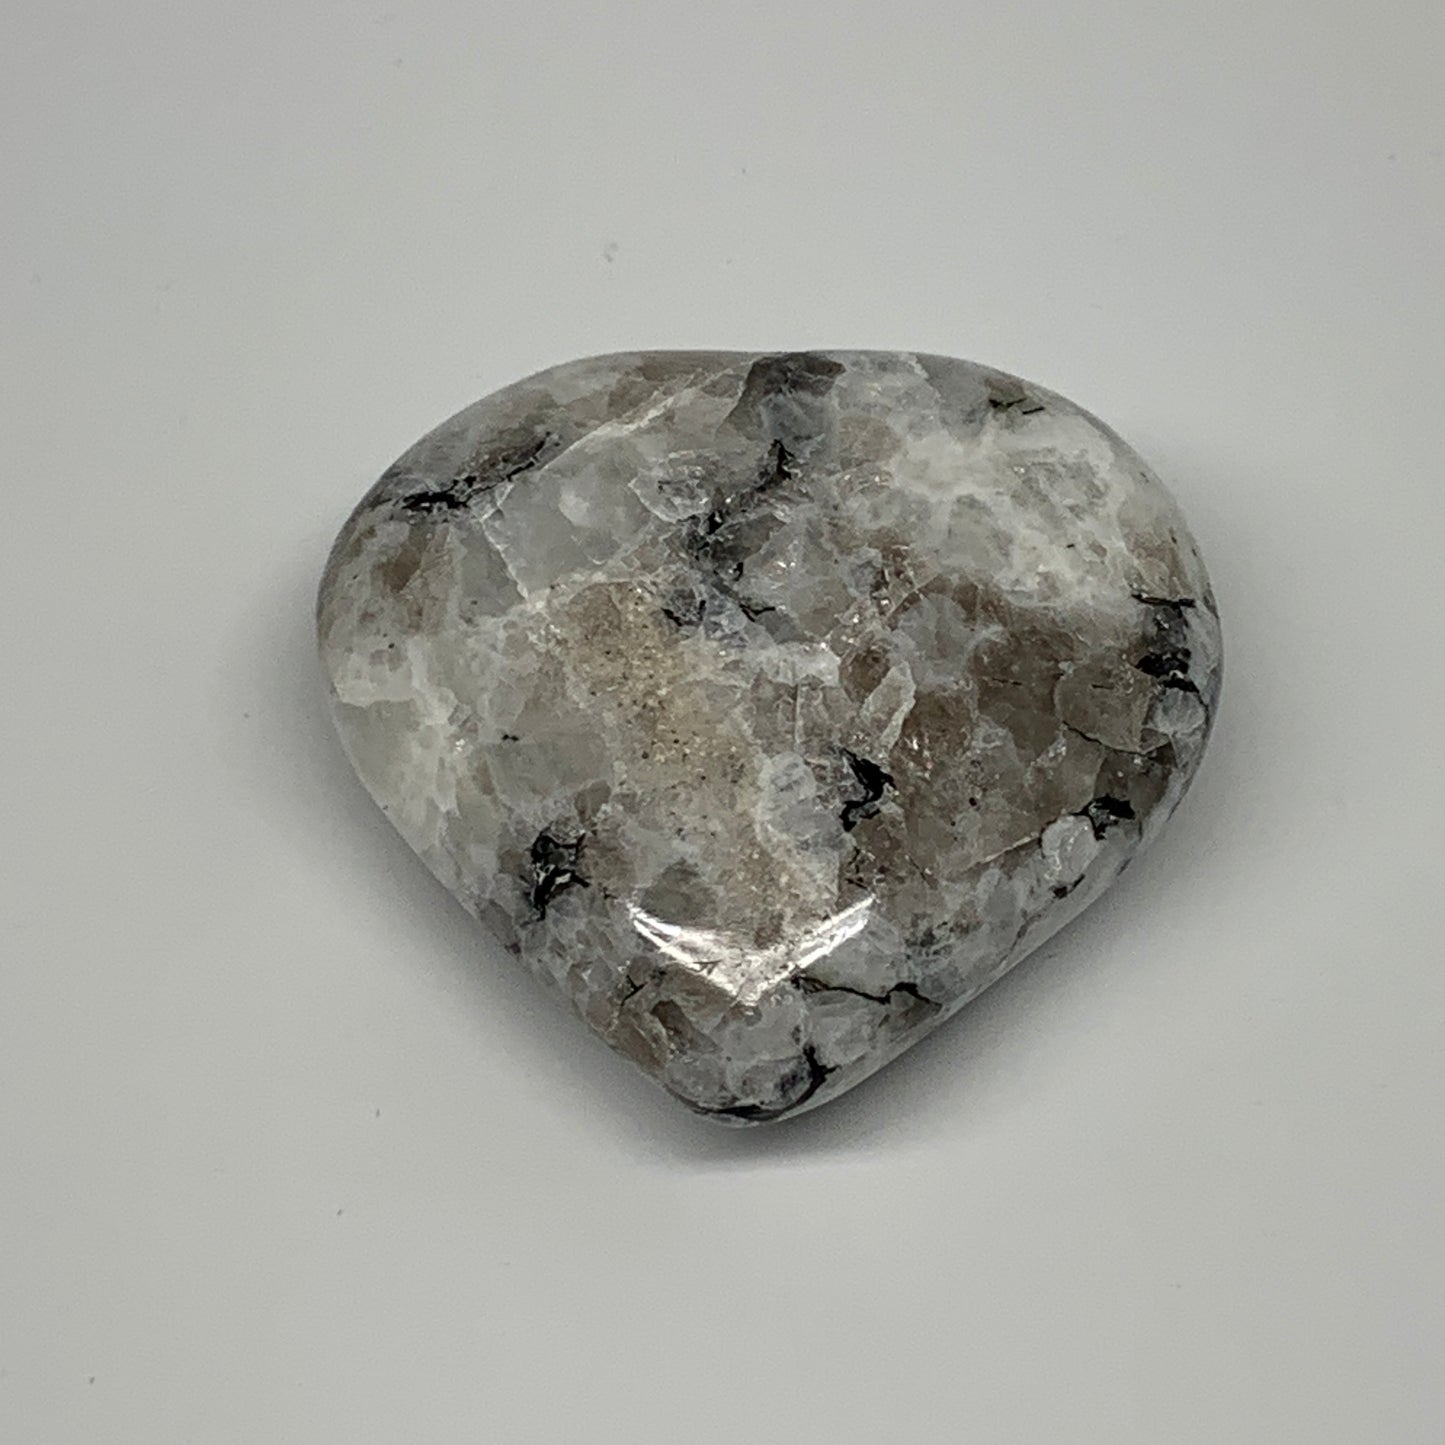 110.3g, 2.3"x2.3"x0.9", Rainbow Moonstone Heart Crystal Gemstone @India, B26395